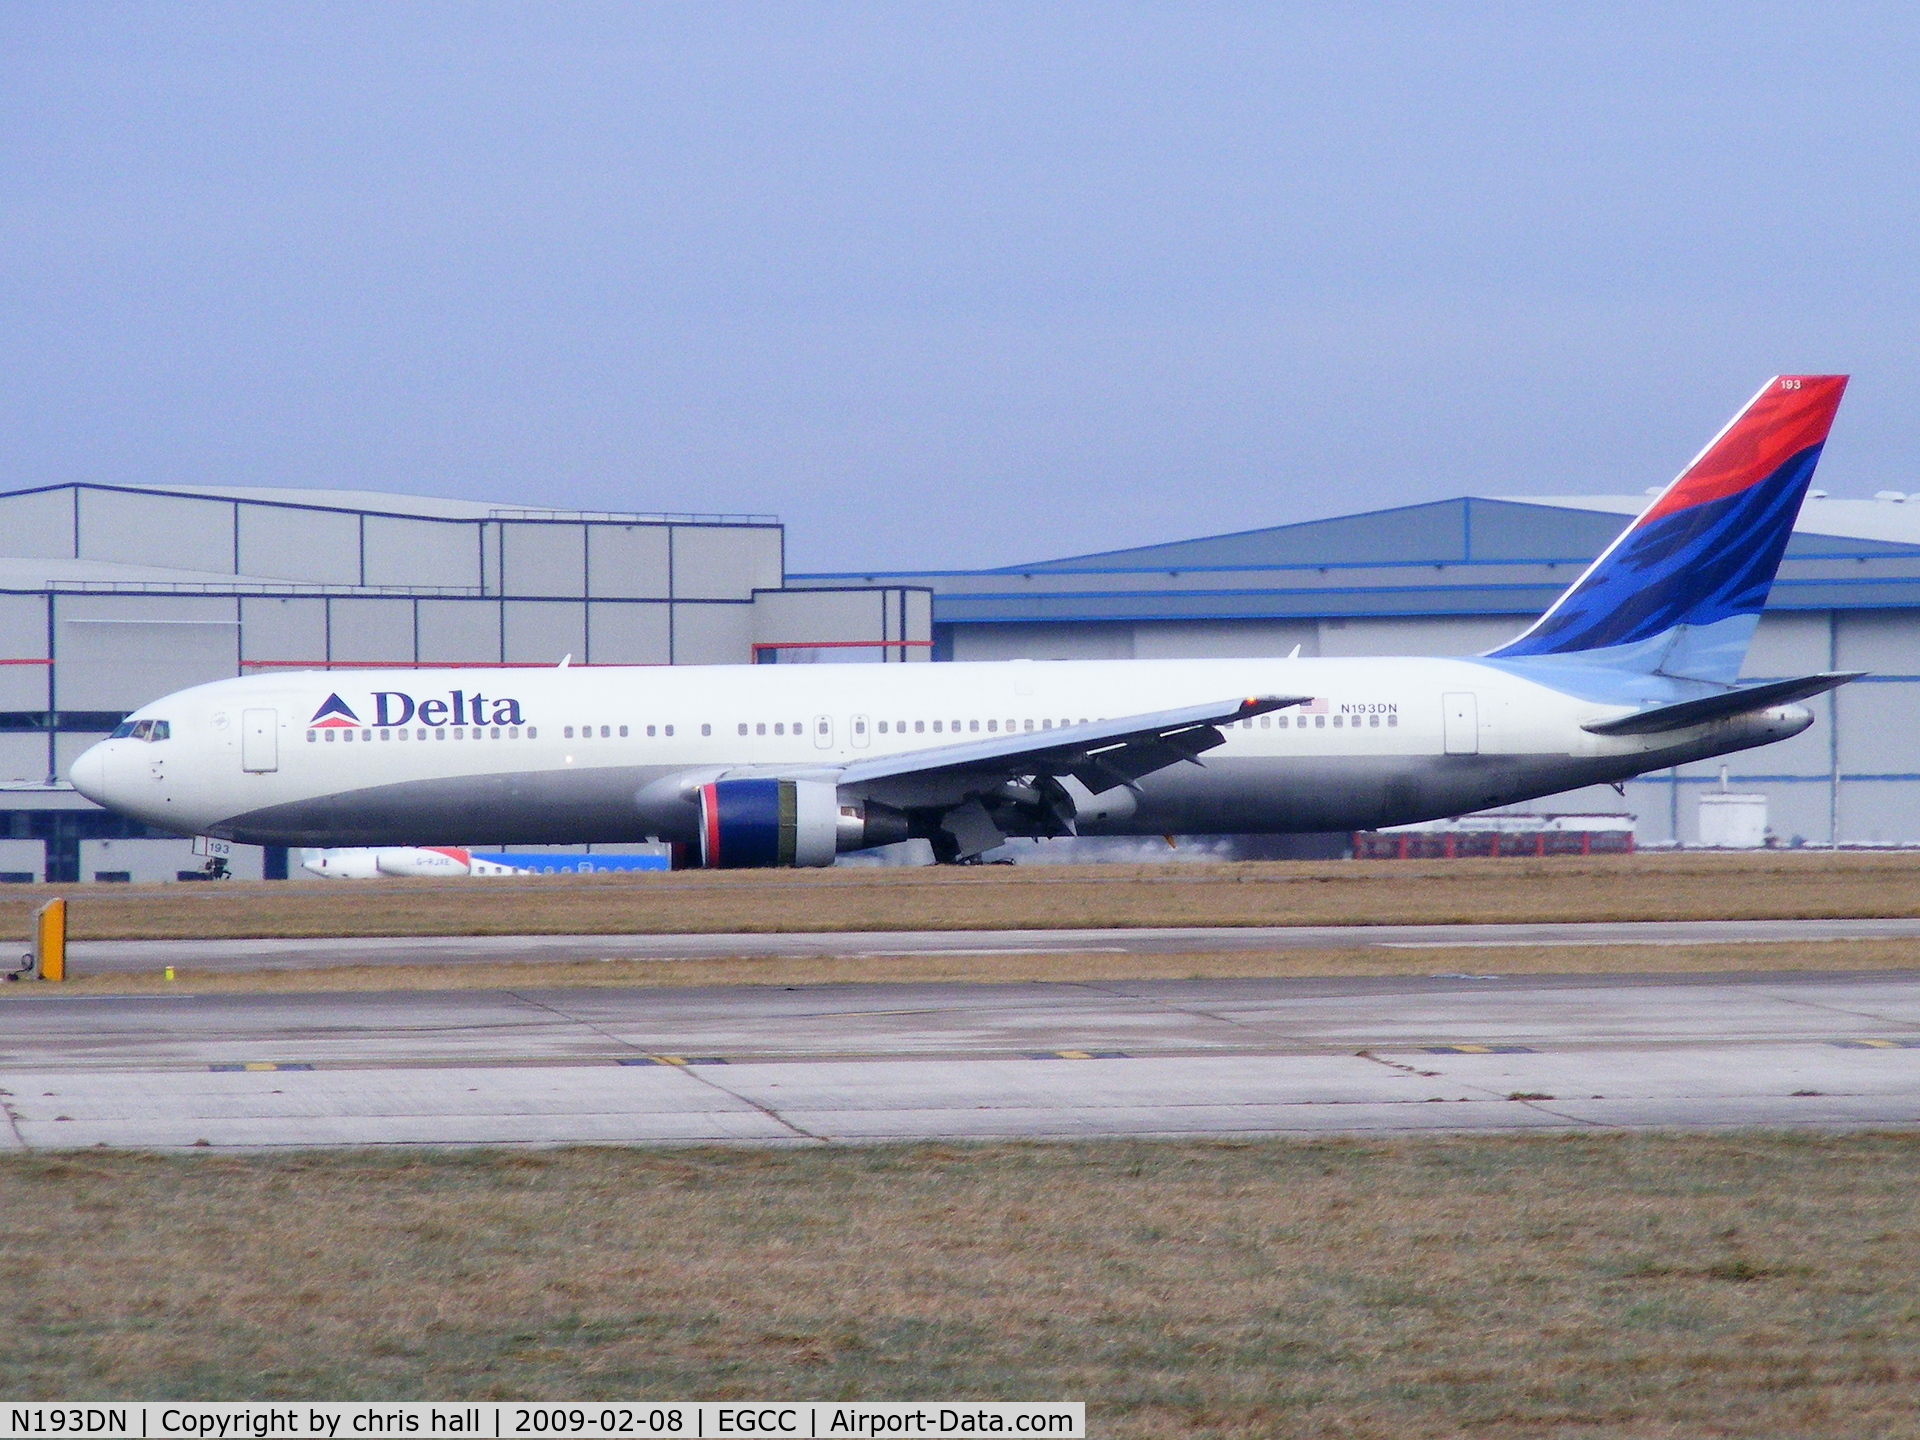 N193DN, 1997 Boeing 767-332 C/N 28450, Delta